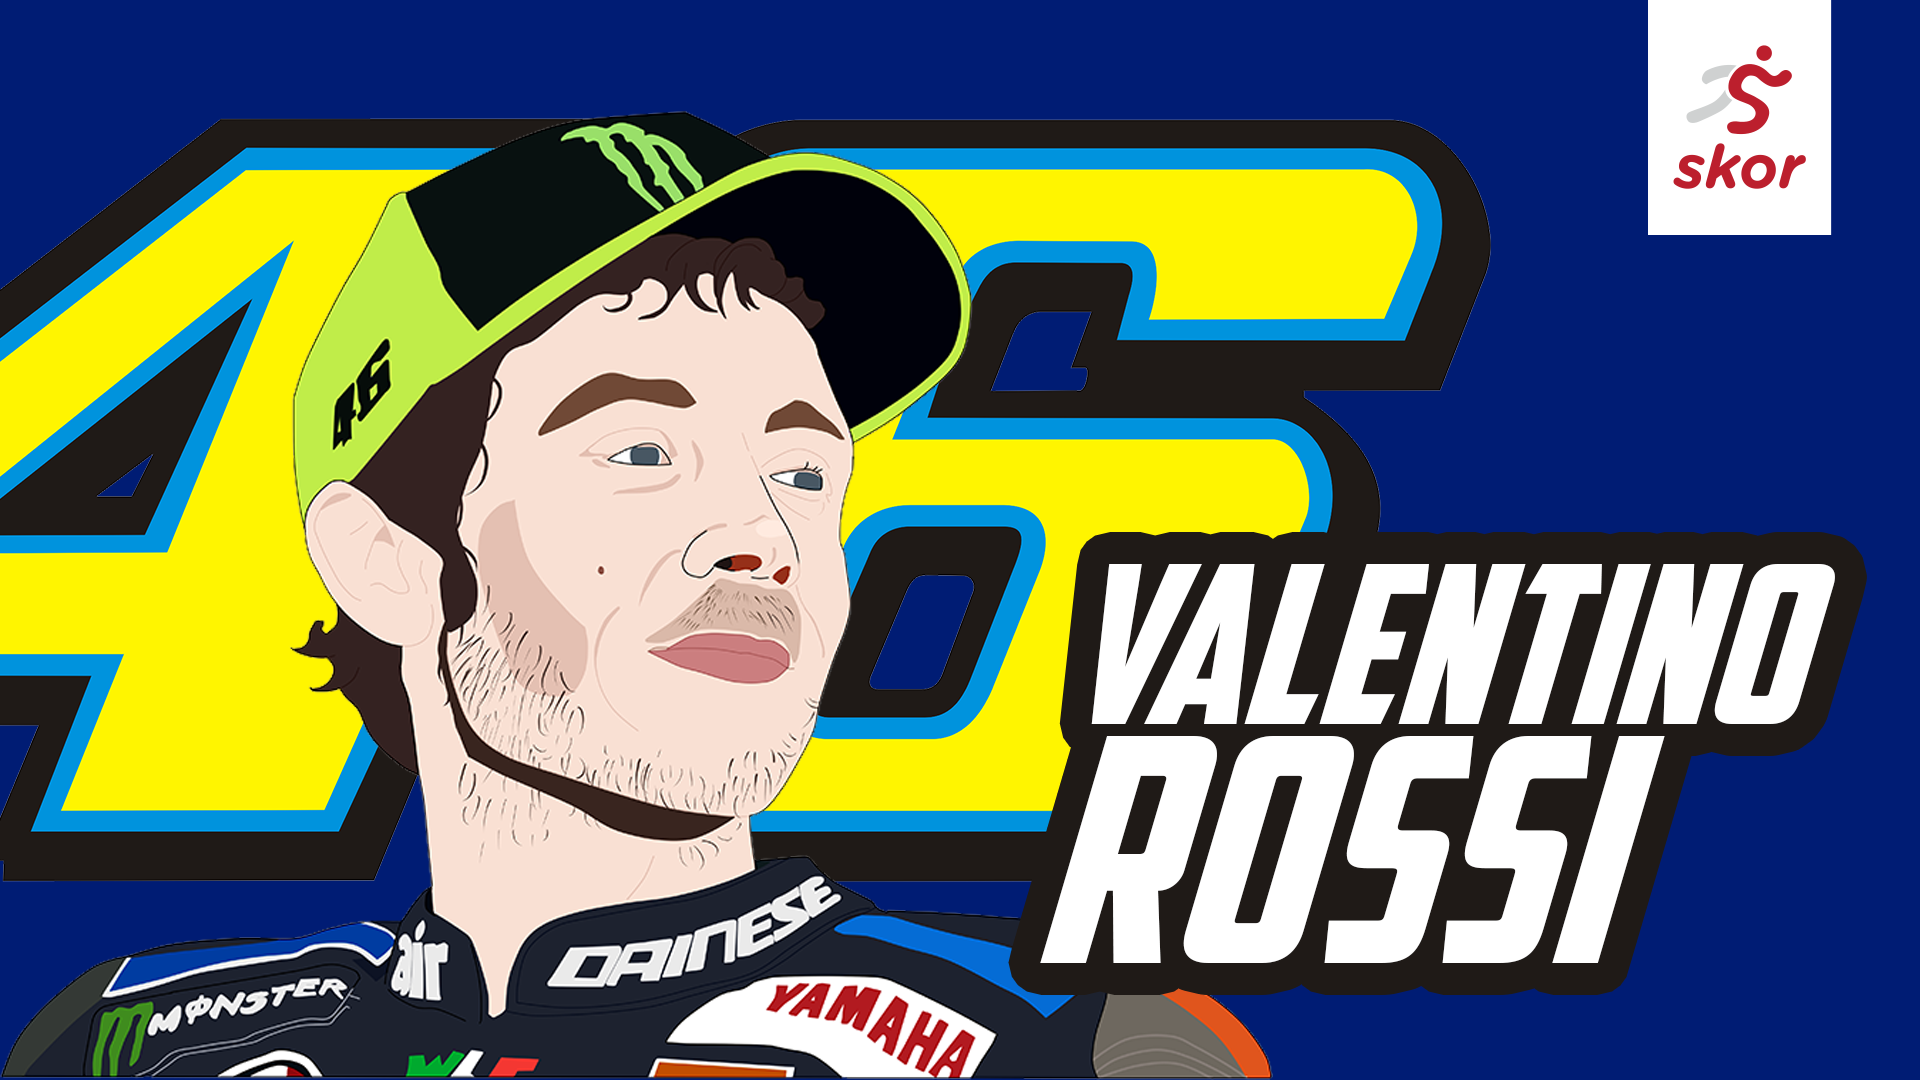 Eksklusif: Geliat Fans Club Valentino Rossi Indonesia Usai Pensiunnya Sang Idola